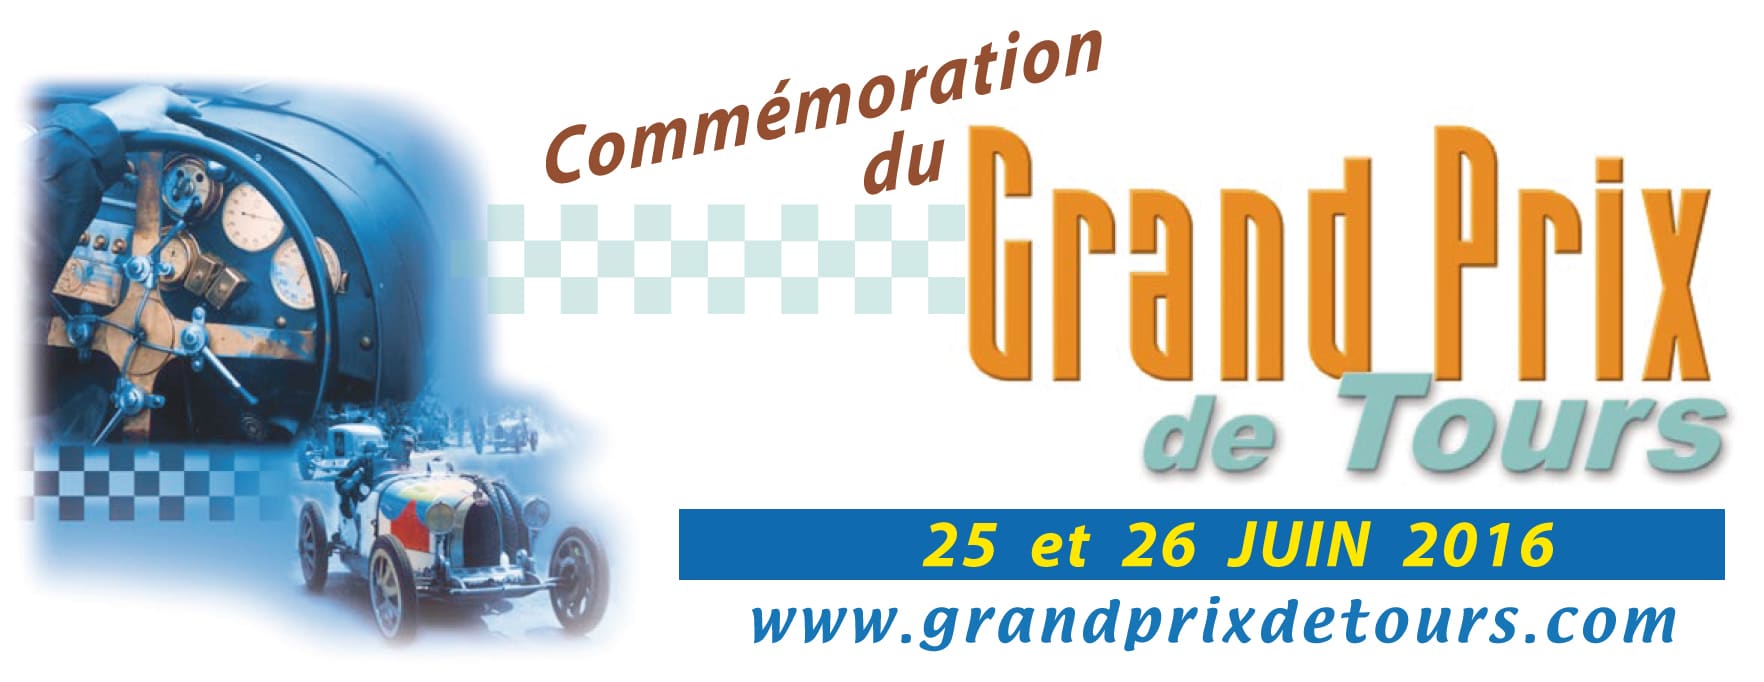 GRAND PRIX DE TOURS 2016